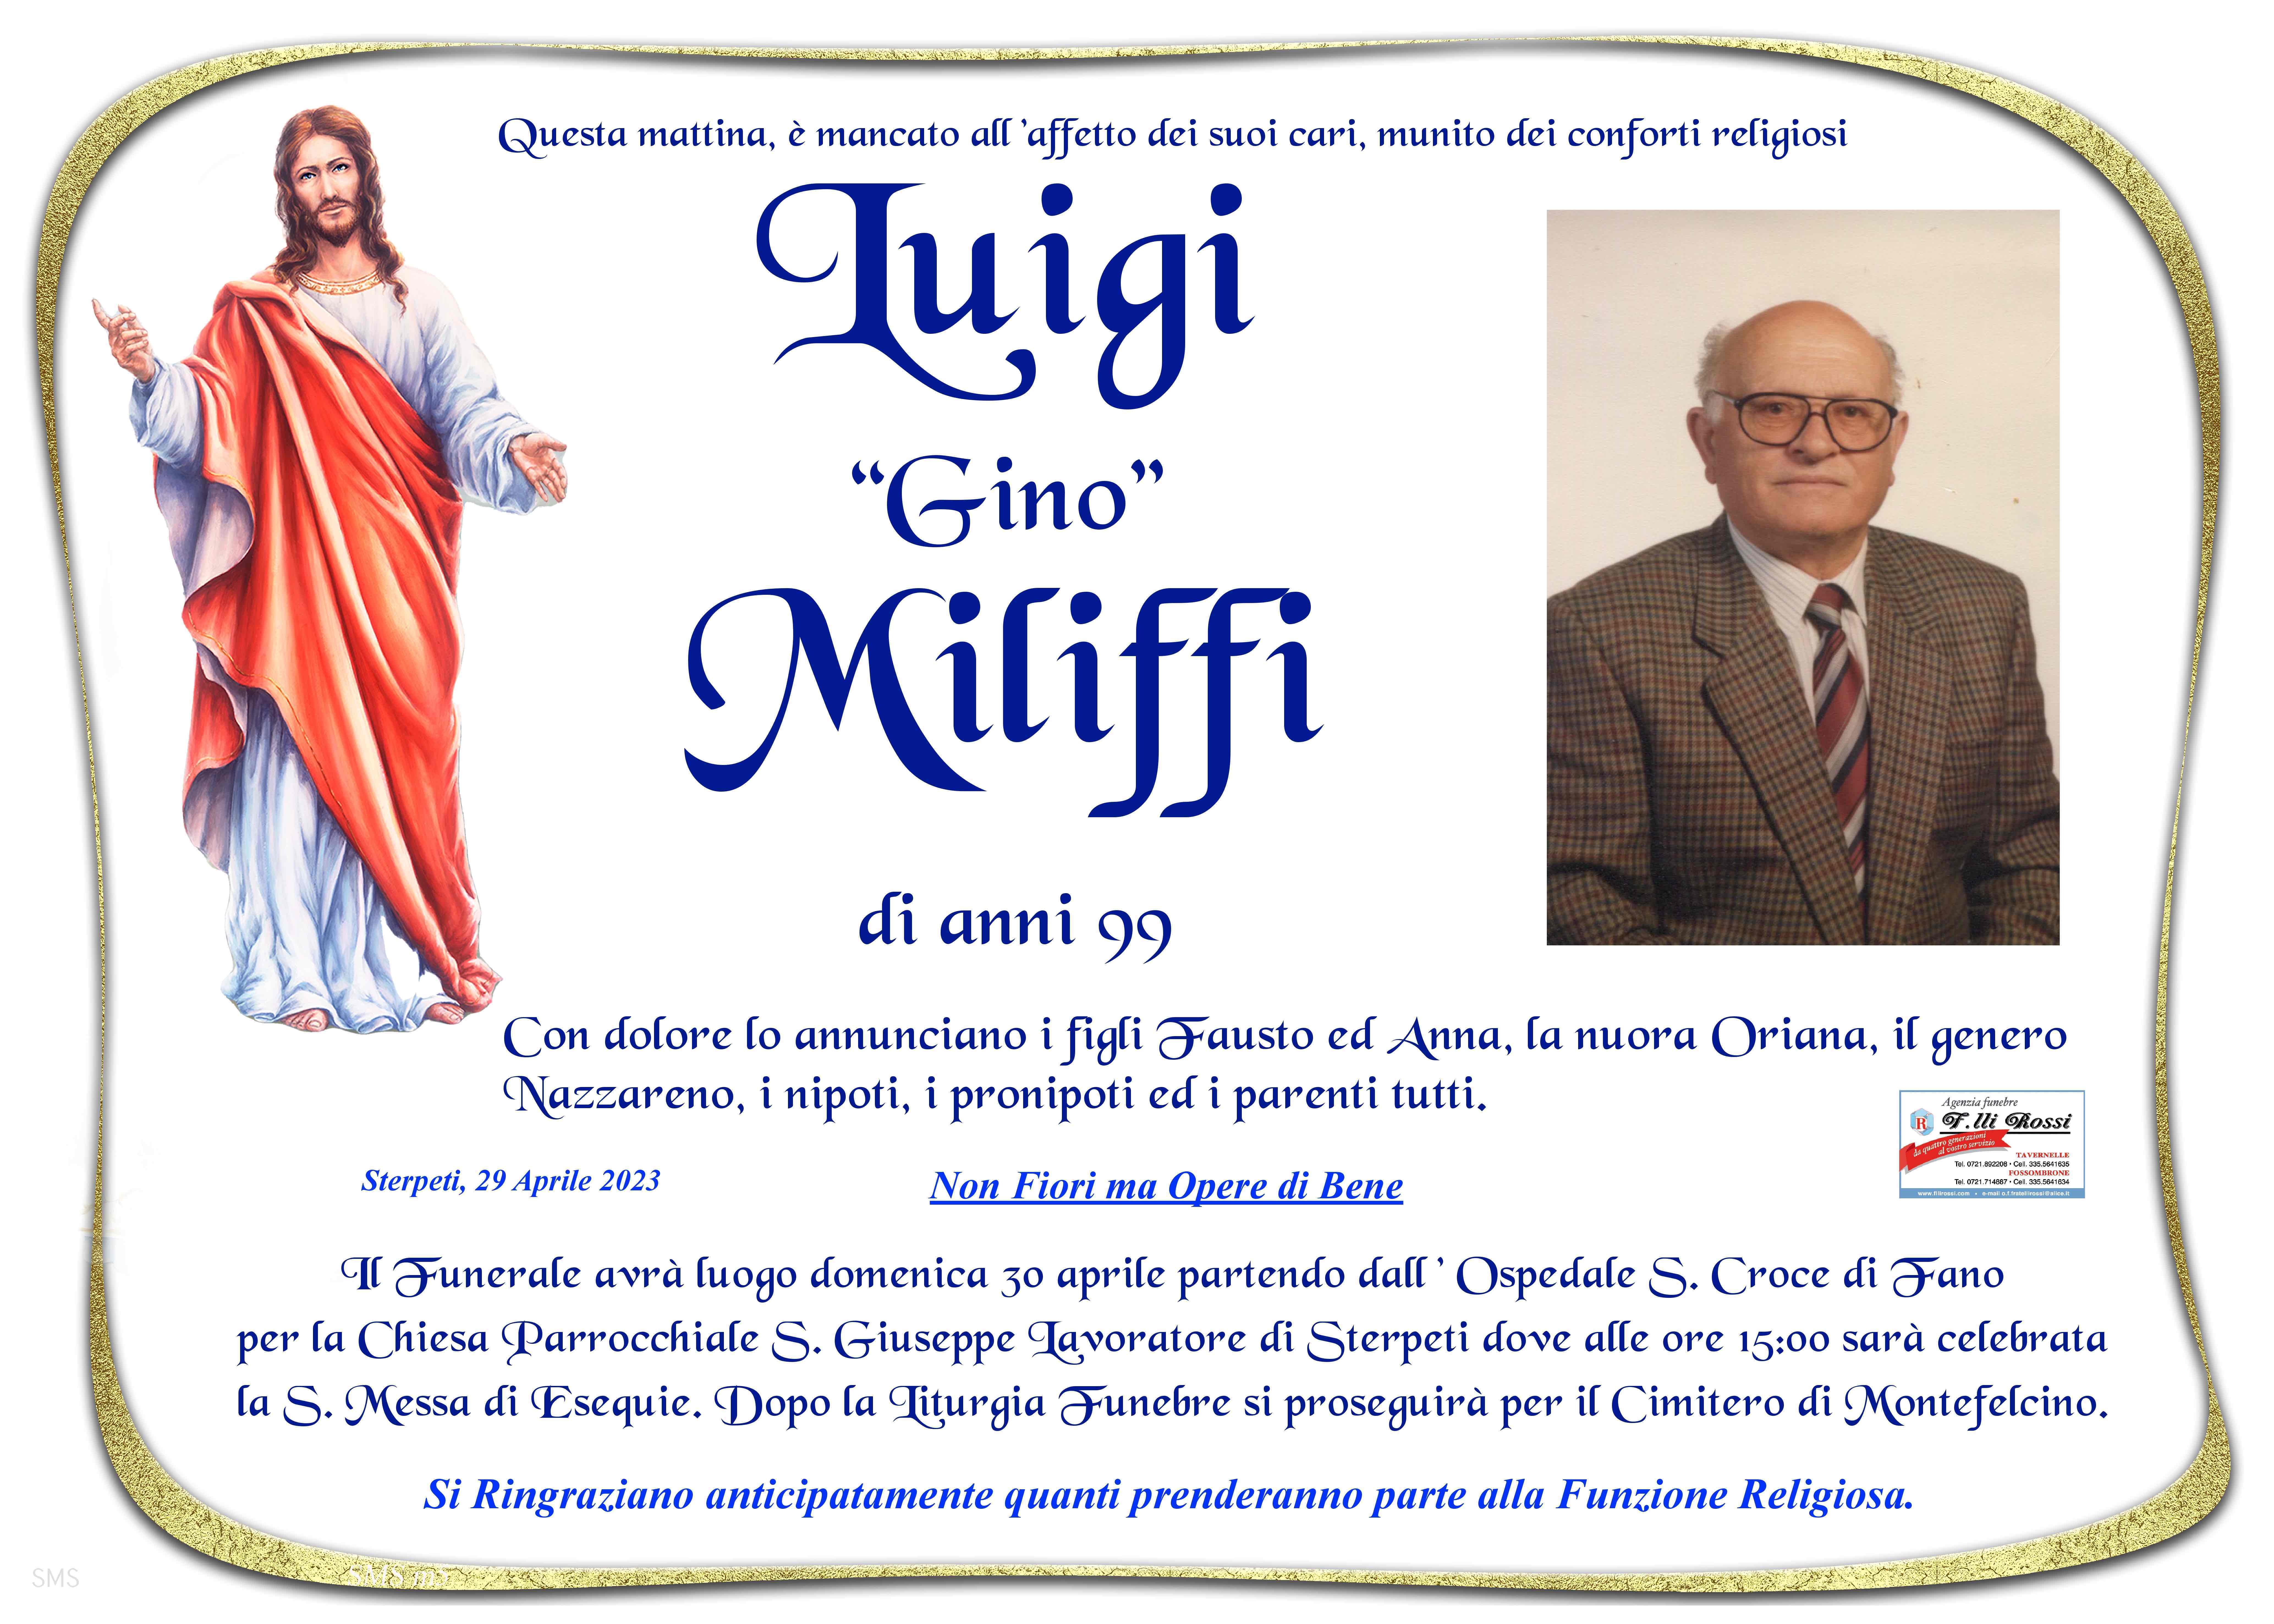 Luigi "Gino" Miliffi